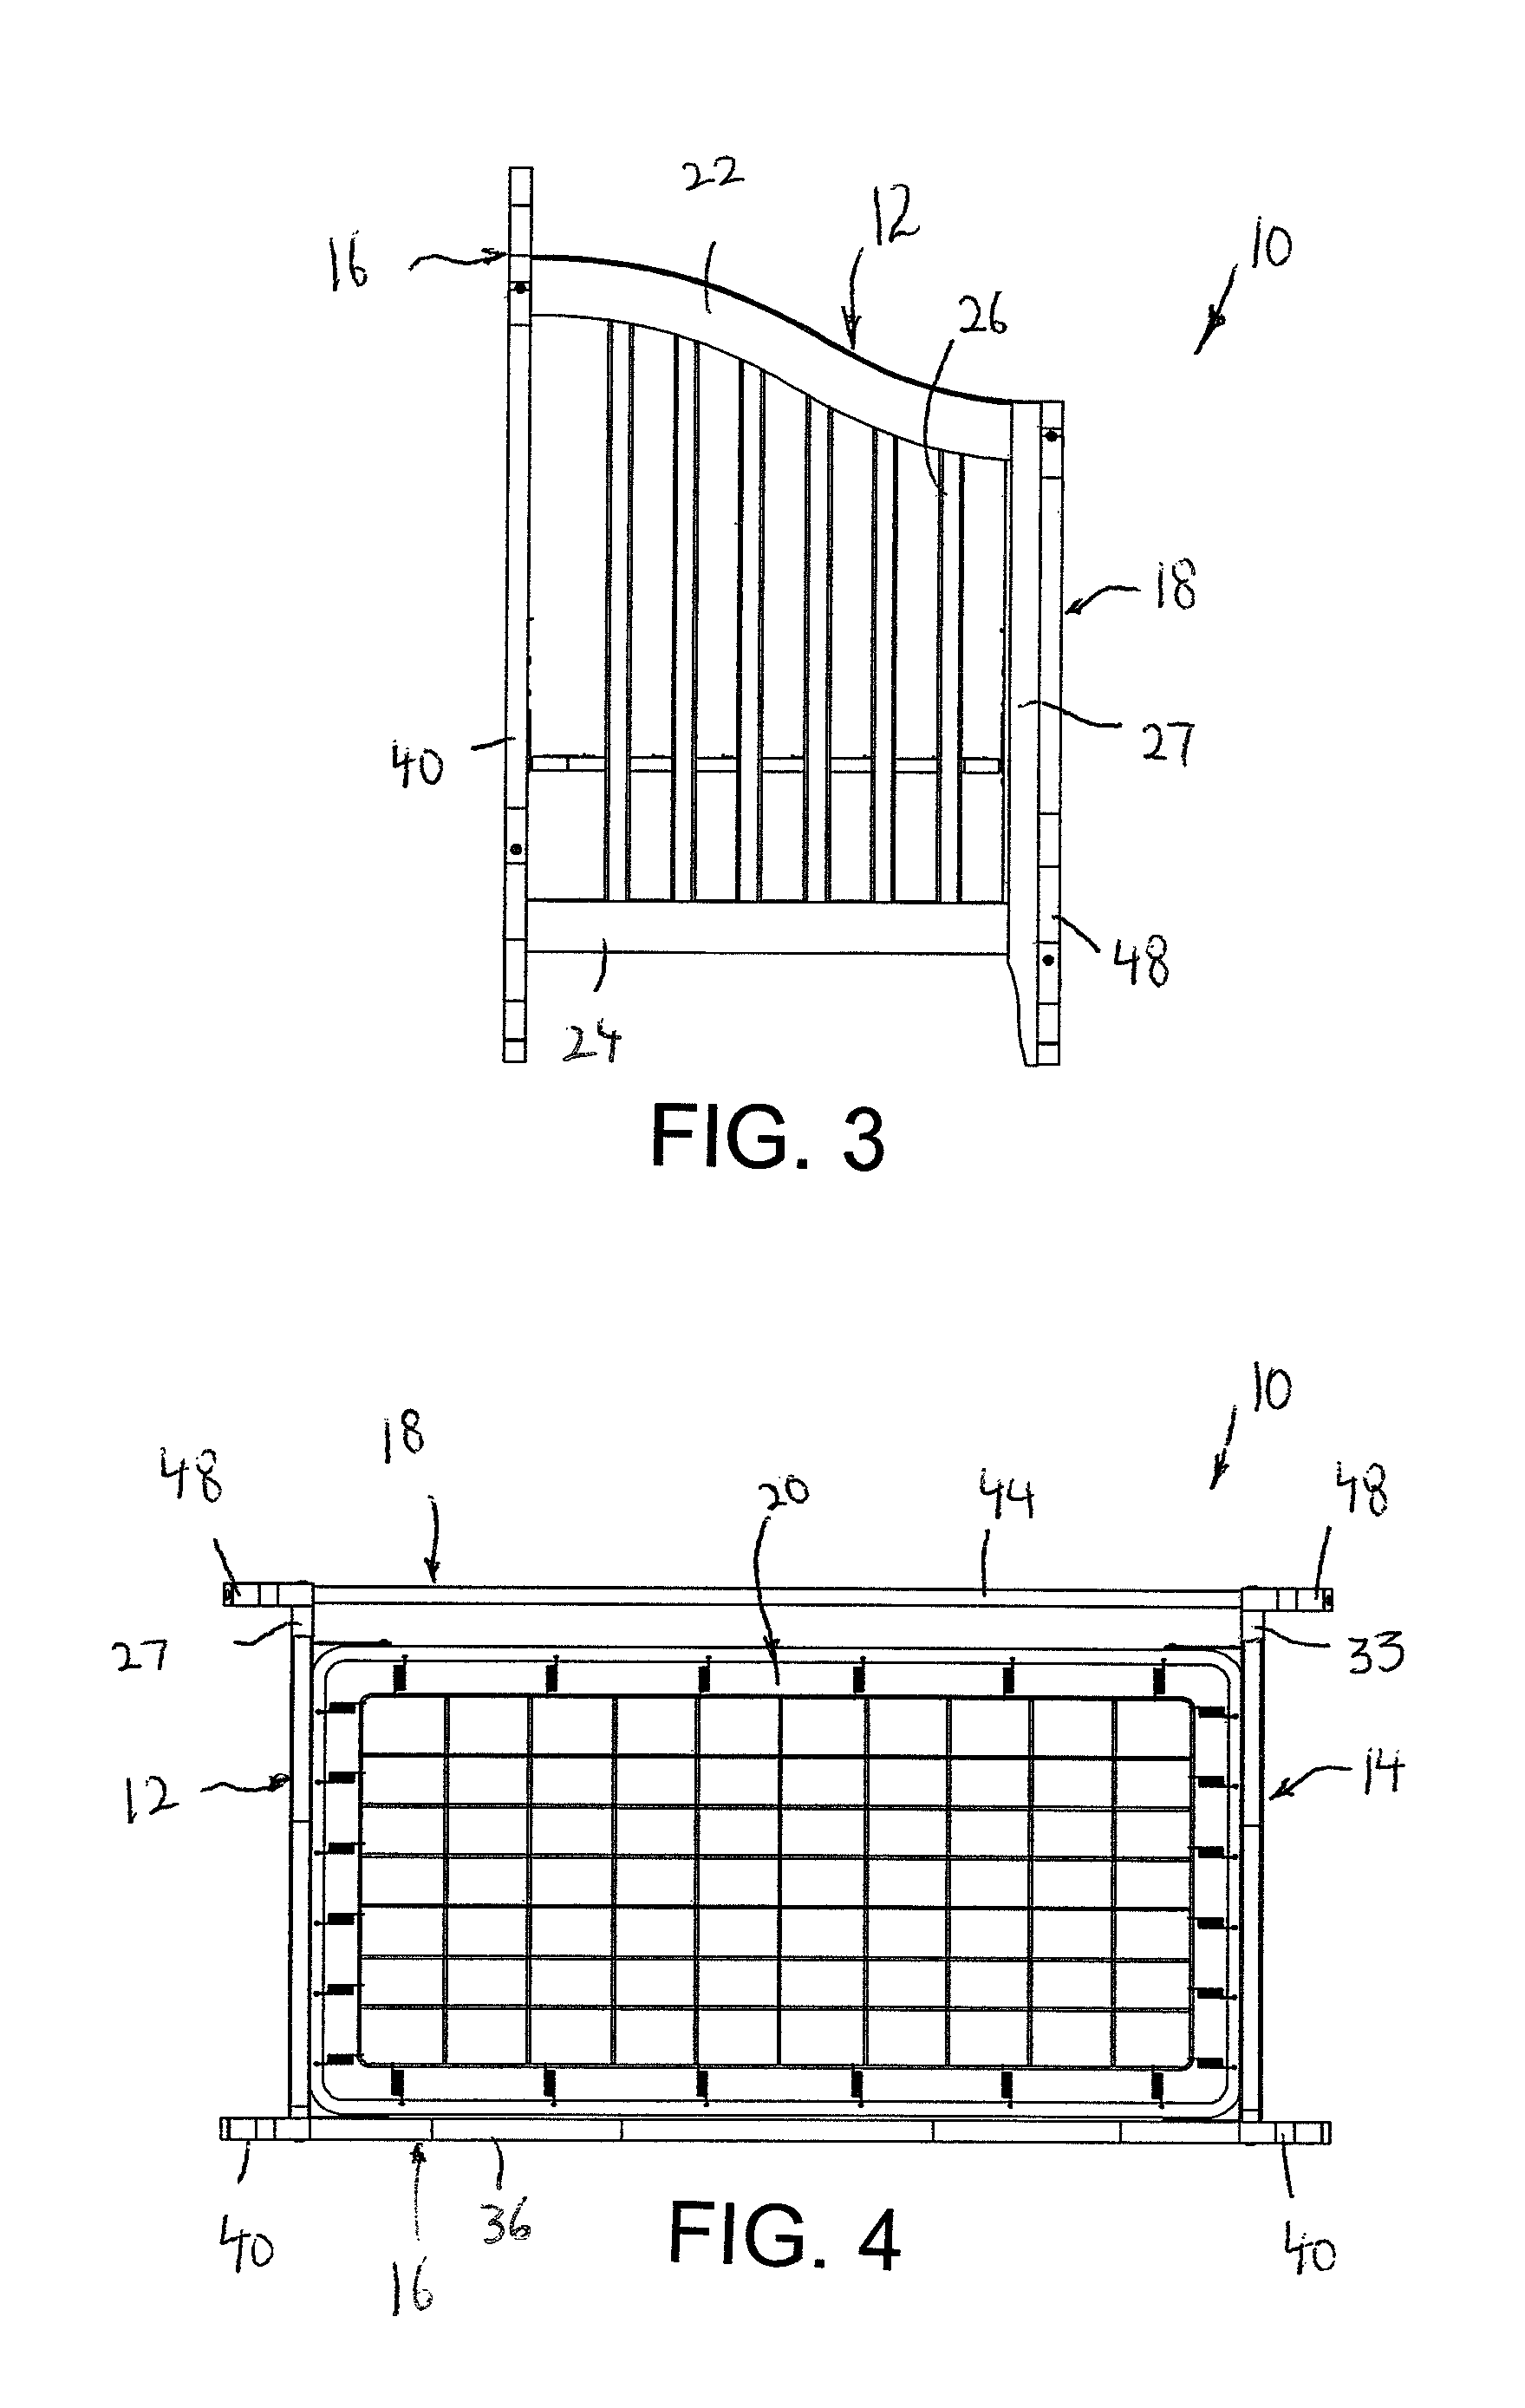 Connecting arrangement for spring deck holder for a crib mattress